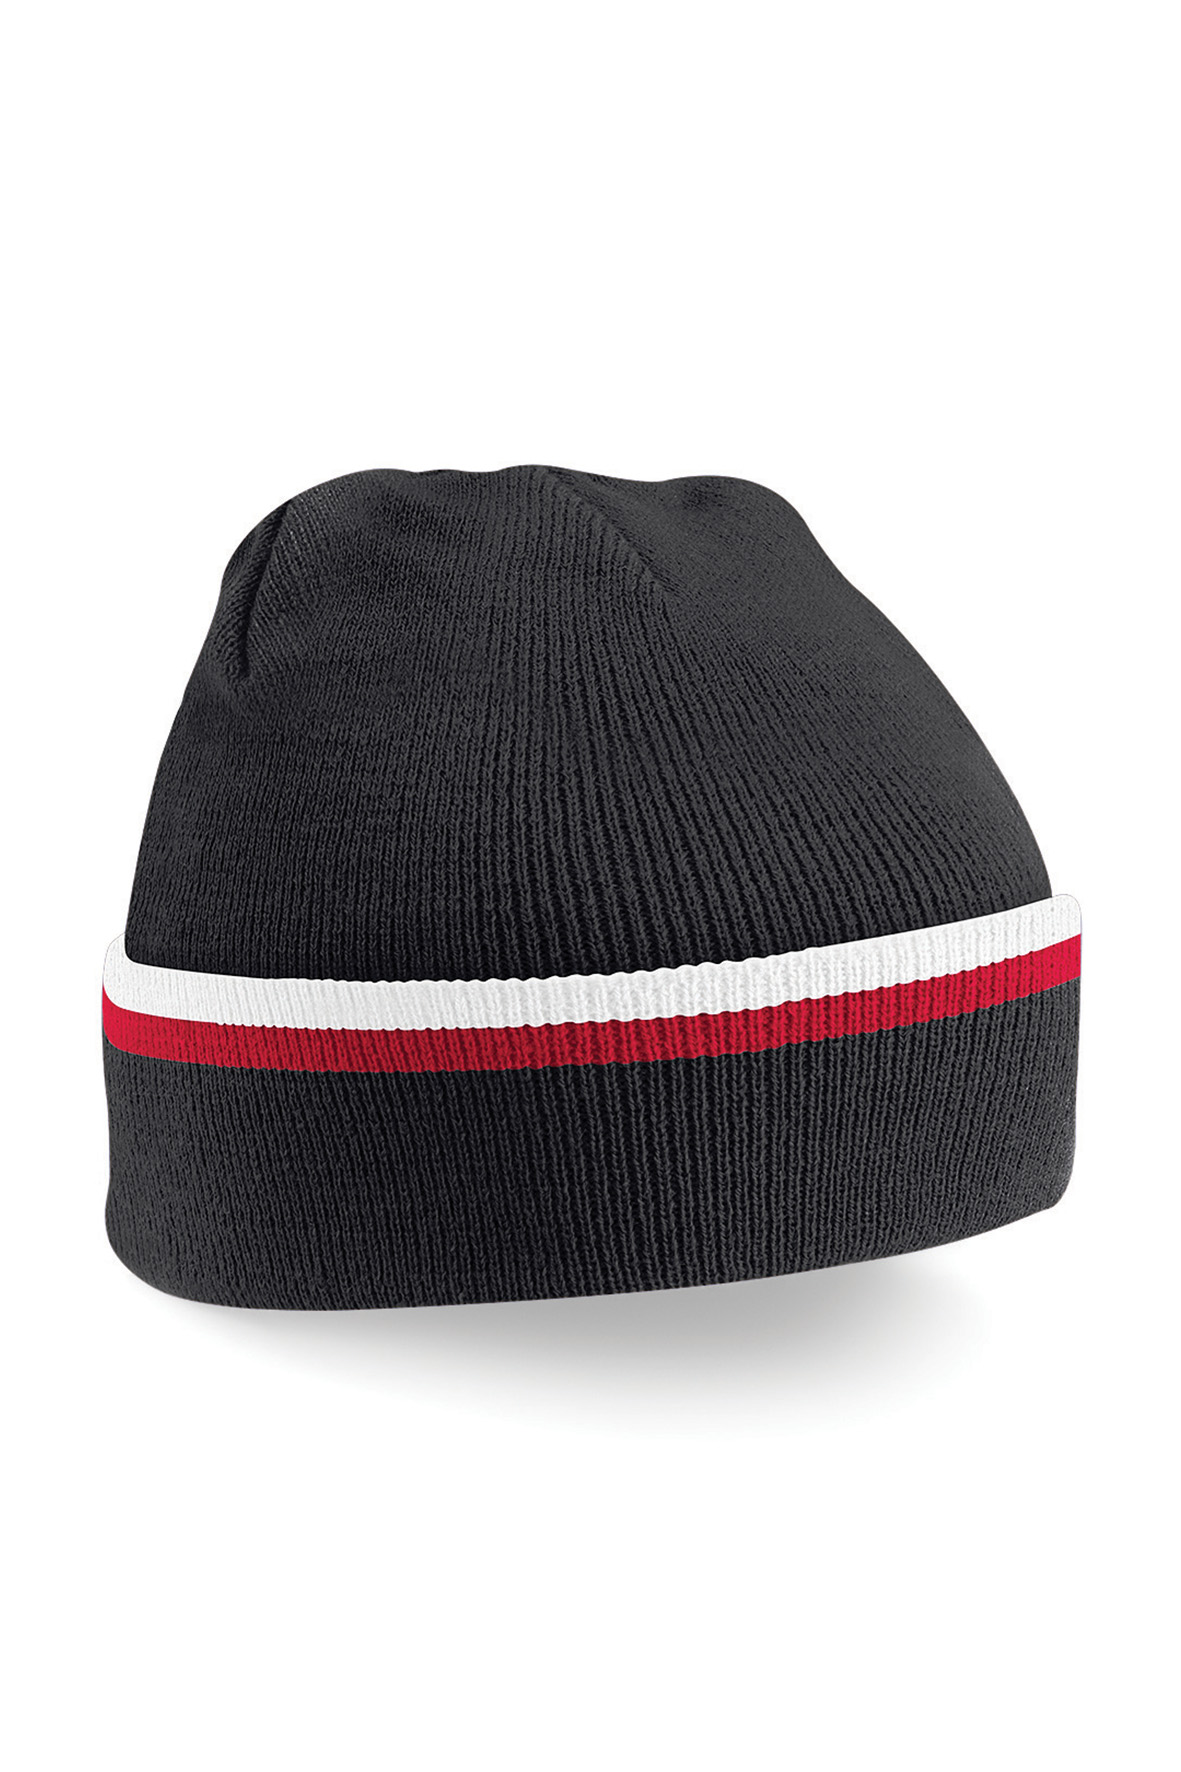 Teamwear Pipo Musta - Classic Red - Valkoinen